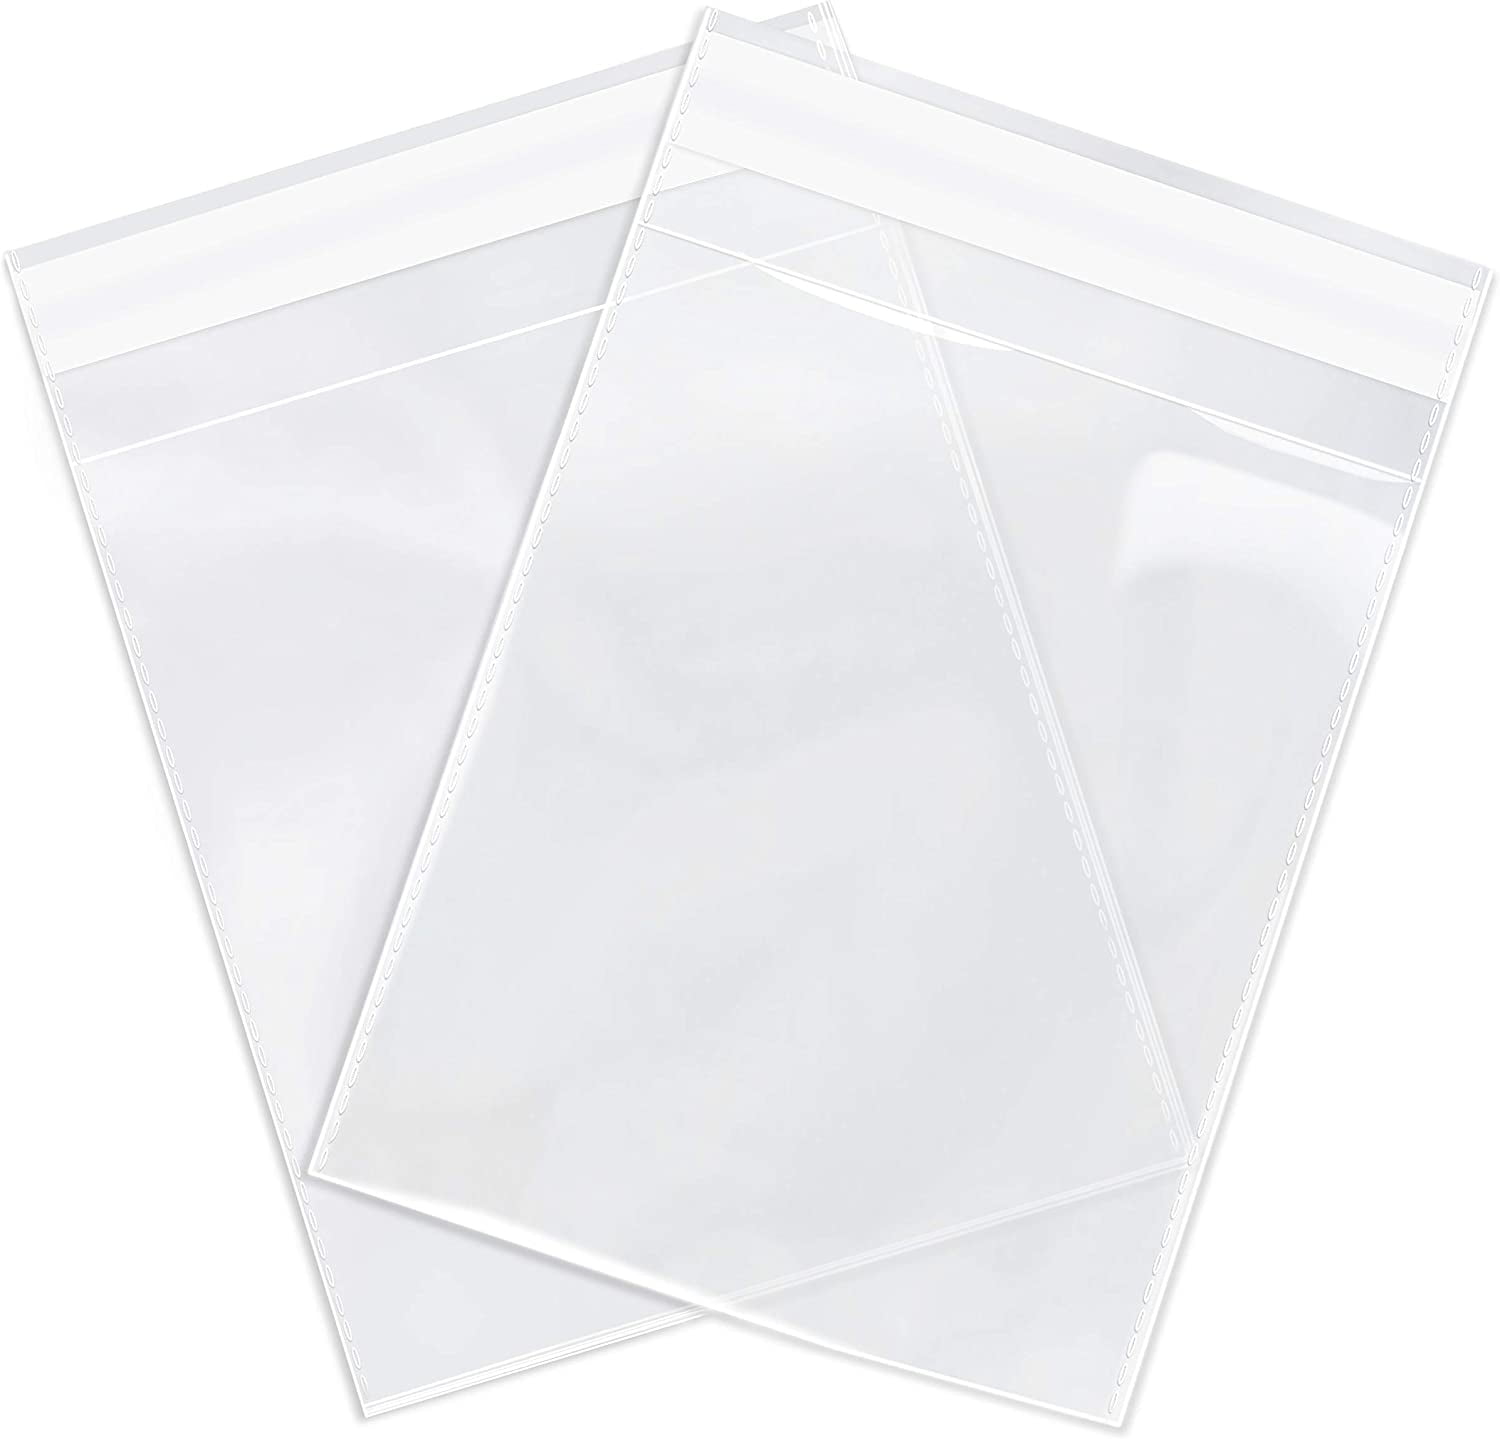  Amiff Clear Plastic Reclosable Zipper Bags, 3 x 5 Inches. 100  Pack 2 Mil Reclosable Plastic Bags with Zipper Closure. Durable Industrial  Poly Bags Reclosable. Waterproof Reclosable Zip Bags Clear : Industrial &  Scientific